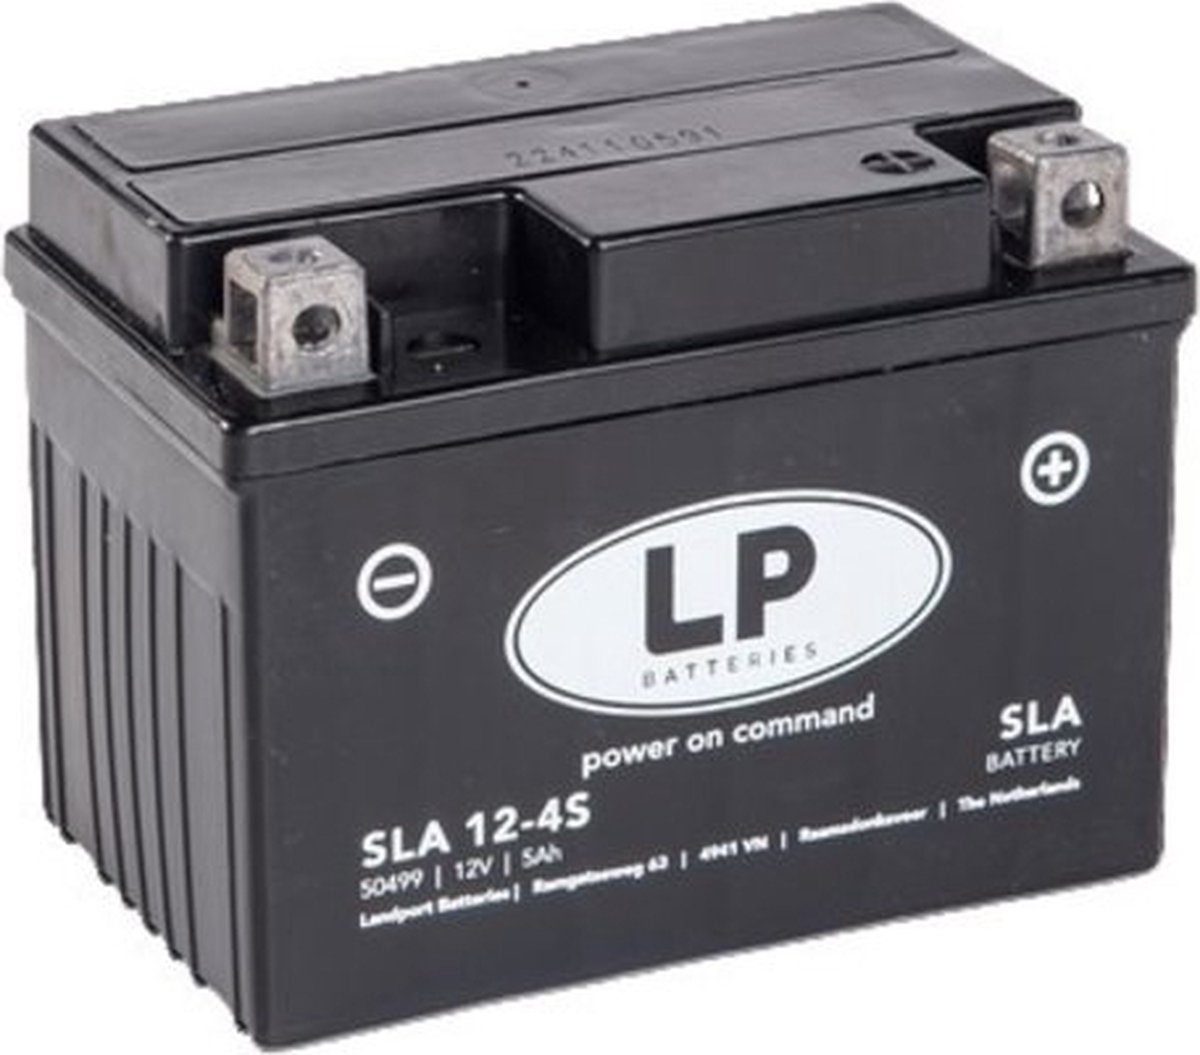 LANDPORT (LP) SLA 12-4S AGM MOTOR ACCU 12 VOLT 5,0 AH (50499 - MS SLA 12-4S) - Landport